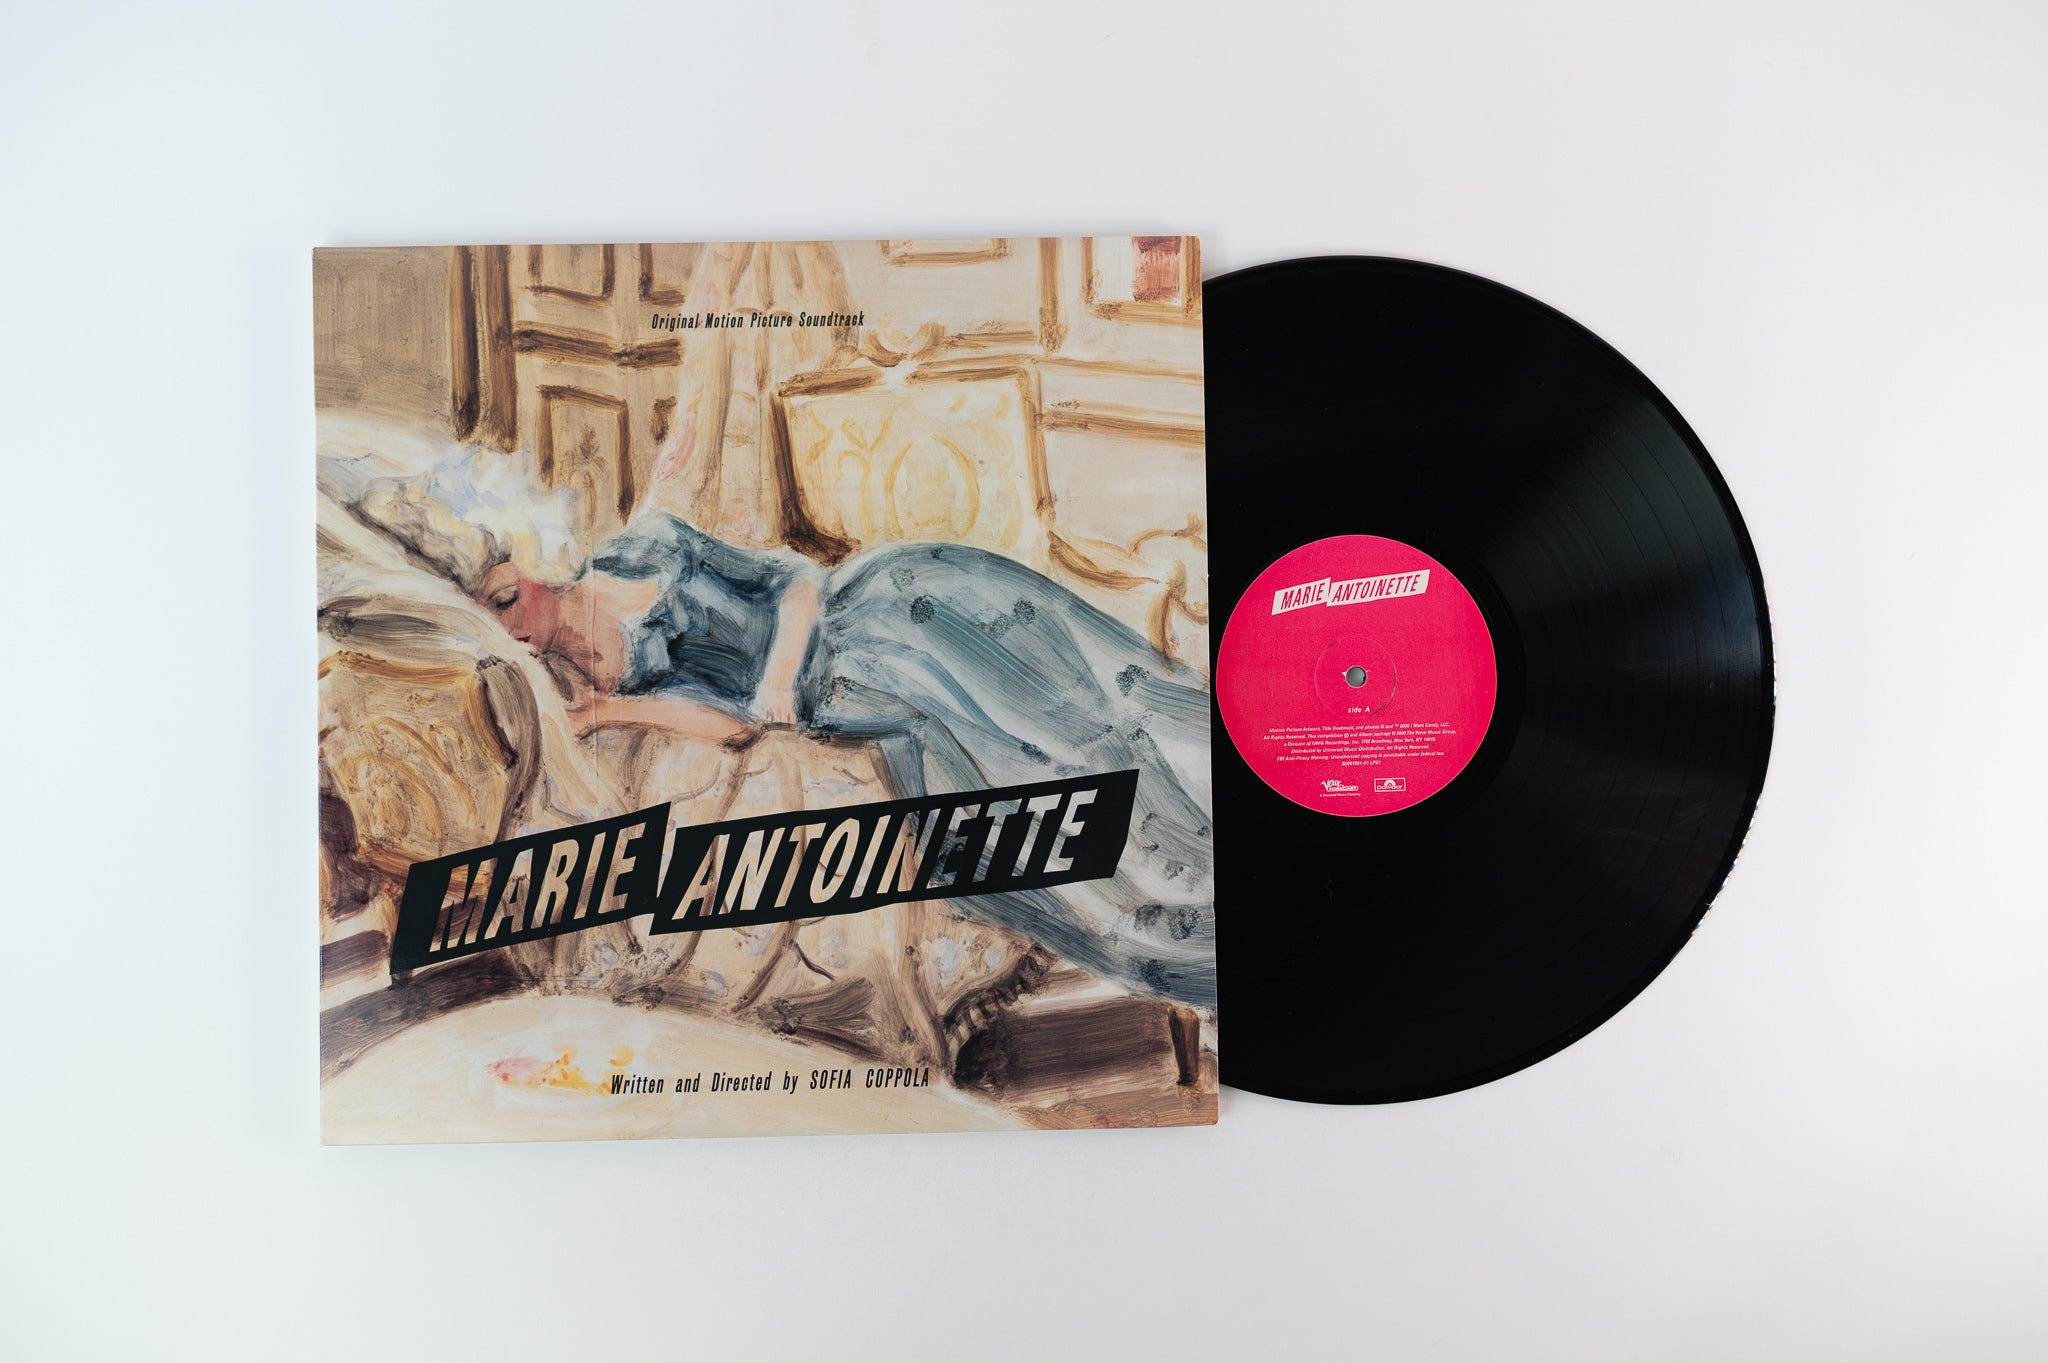 Various - Marie Antoinette (Original Motion Picture Soundtrack) on Verve  Forecast